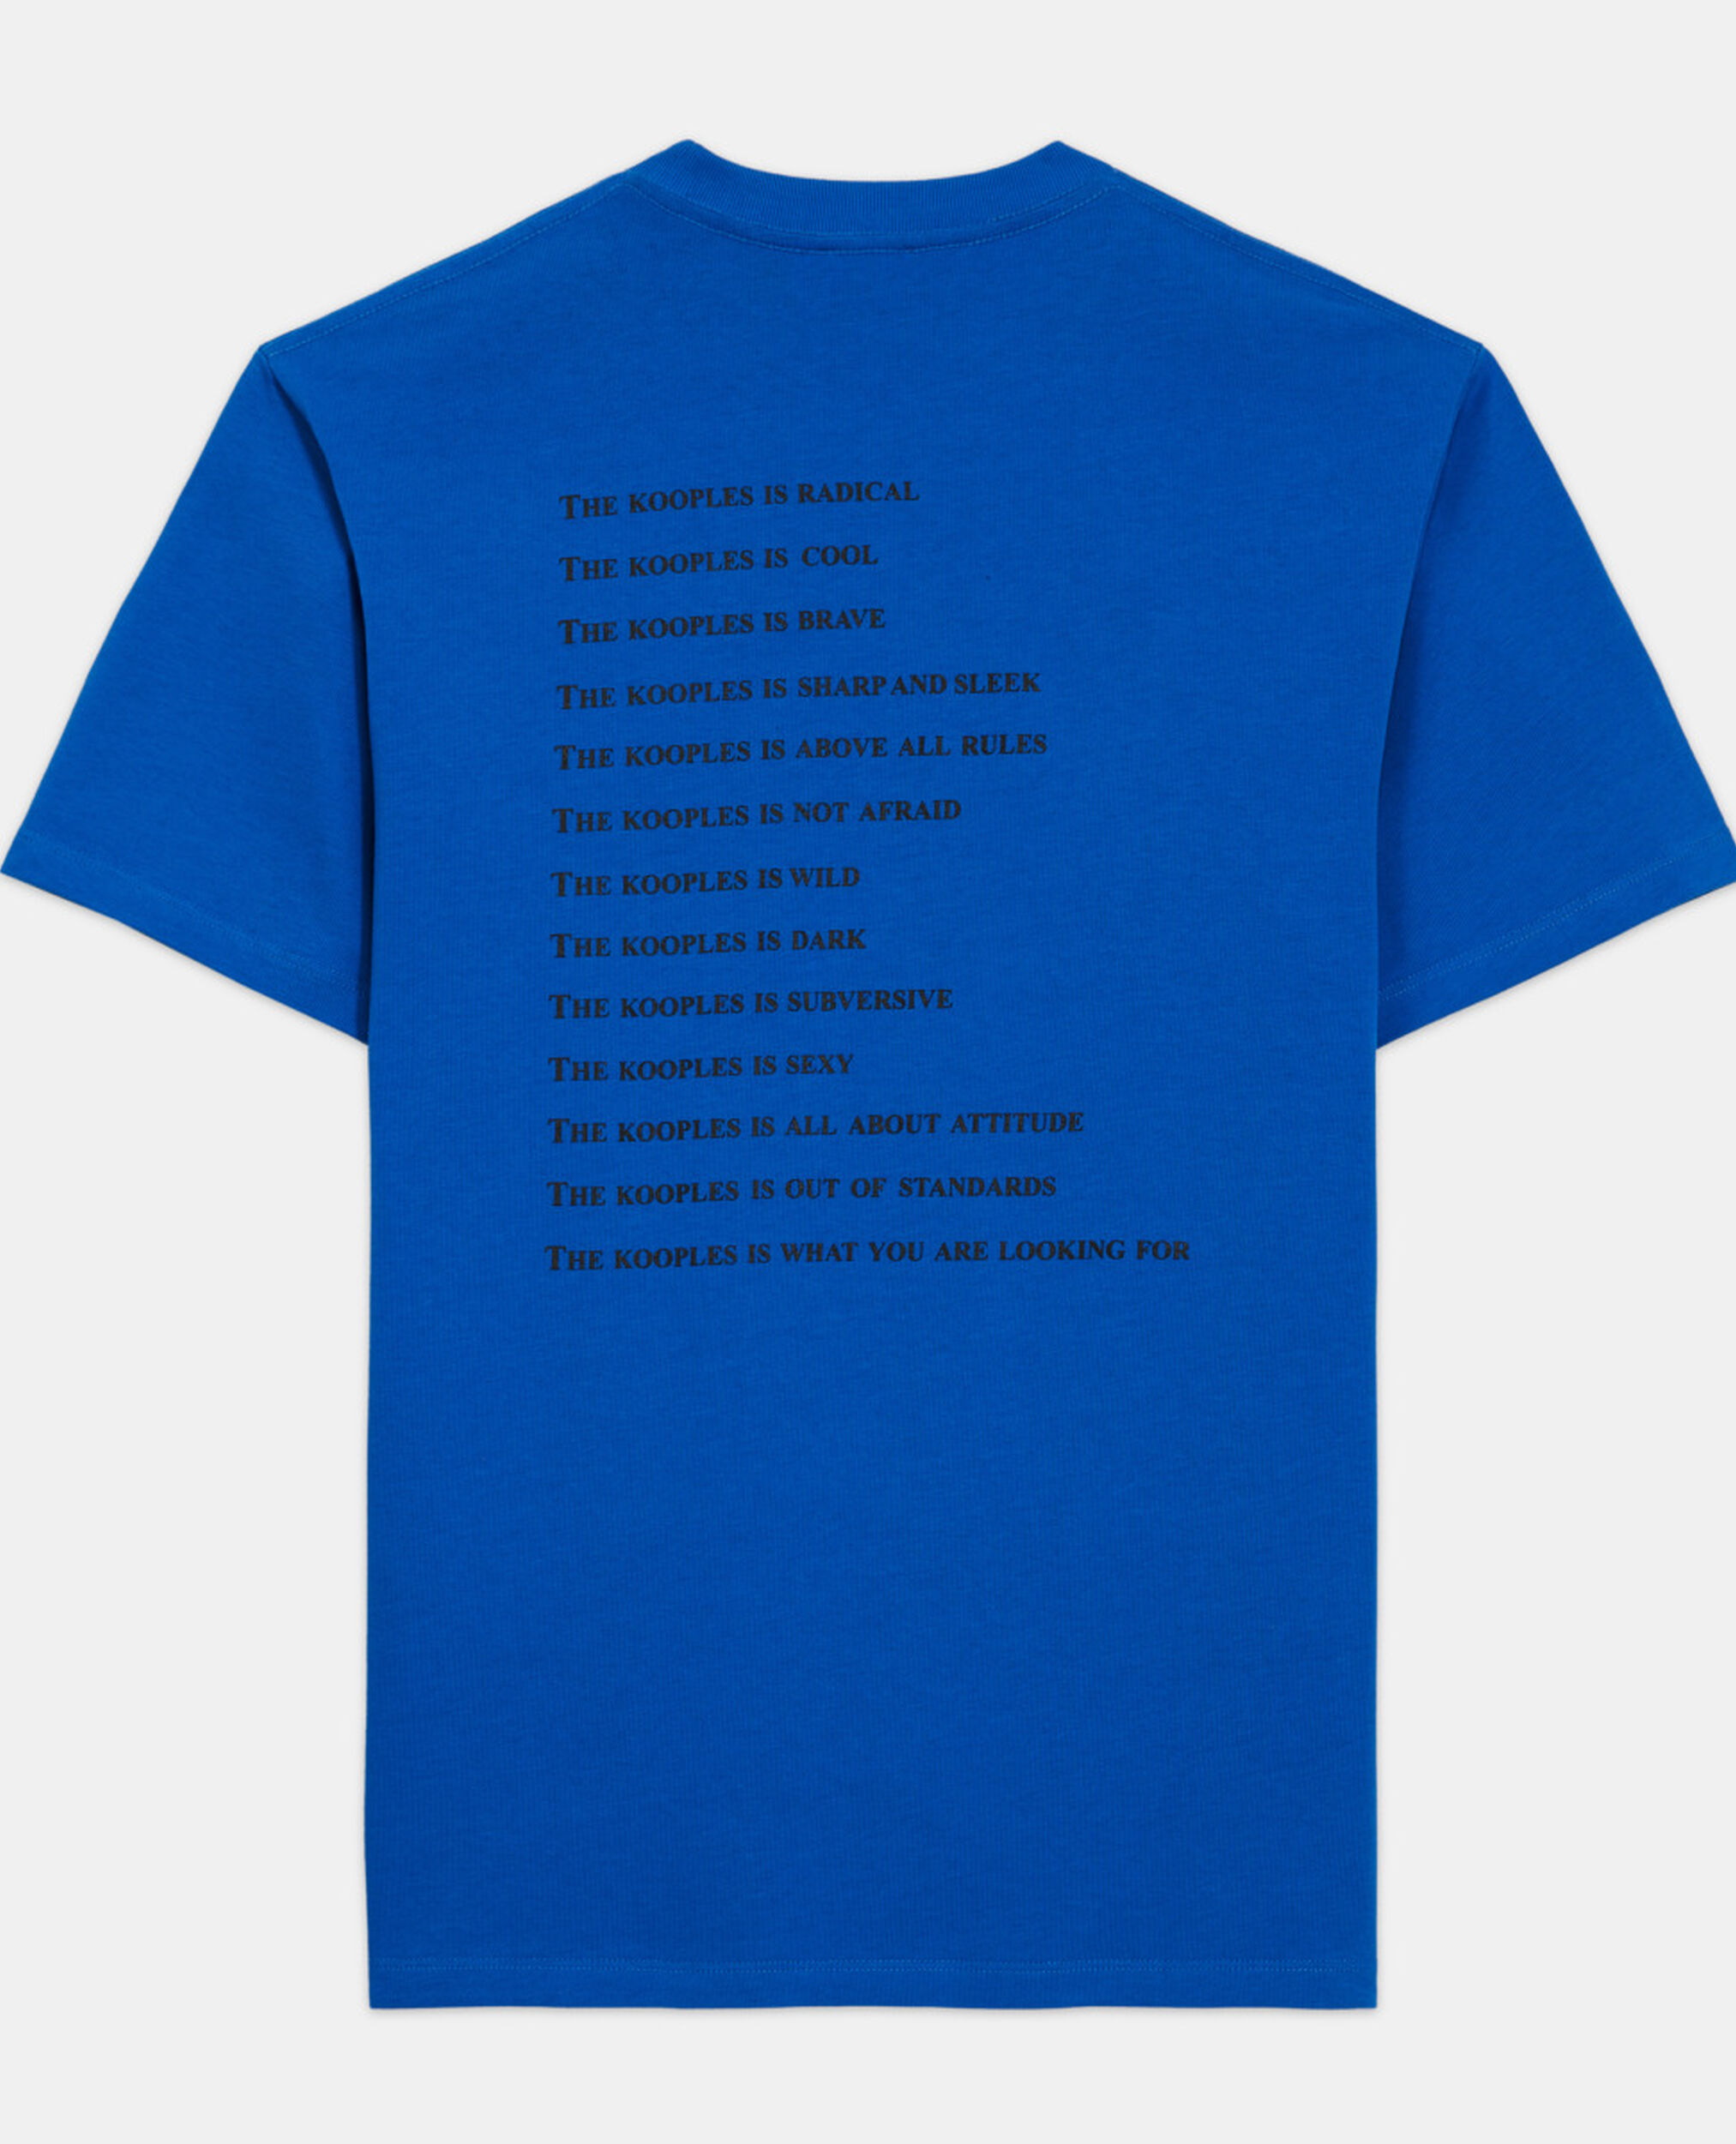 Blaues T-Shirt mit What is-Schriftzug, INK BLUE, hi-res image number null